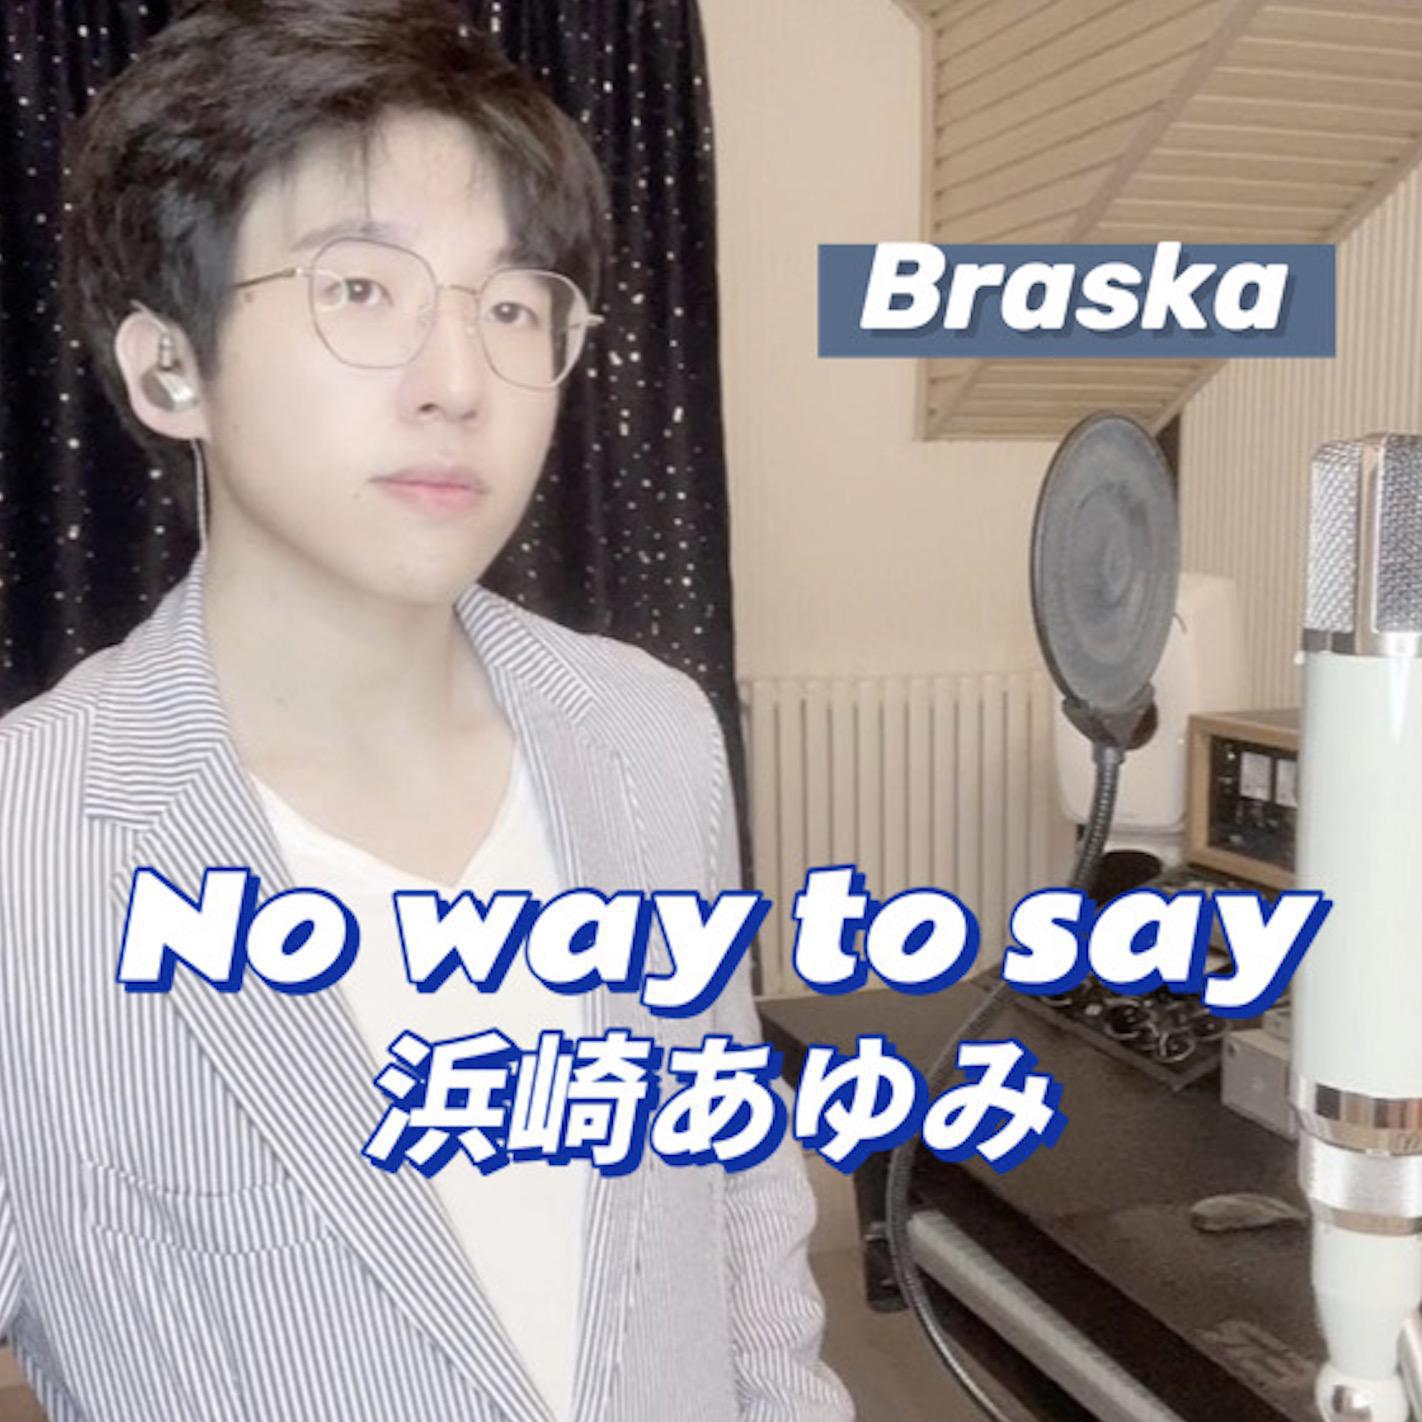 Braska - No way to say